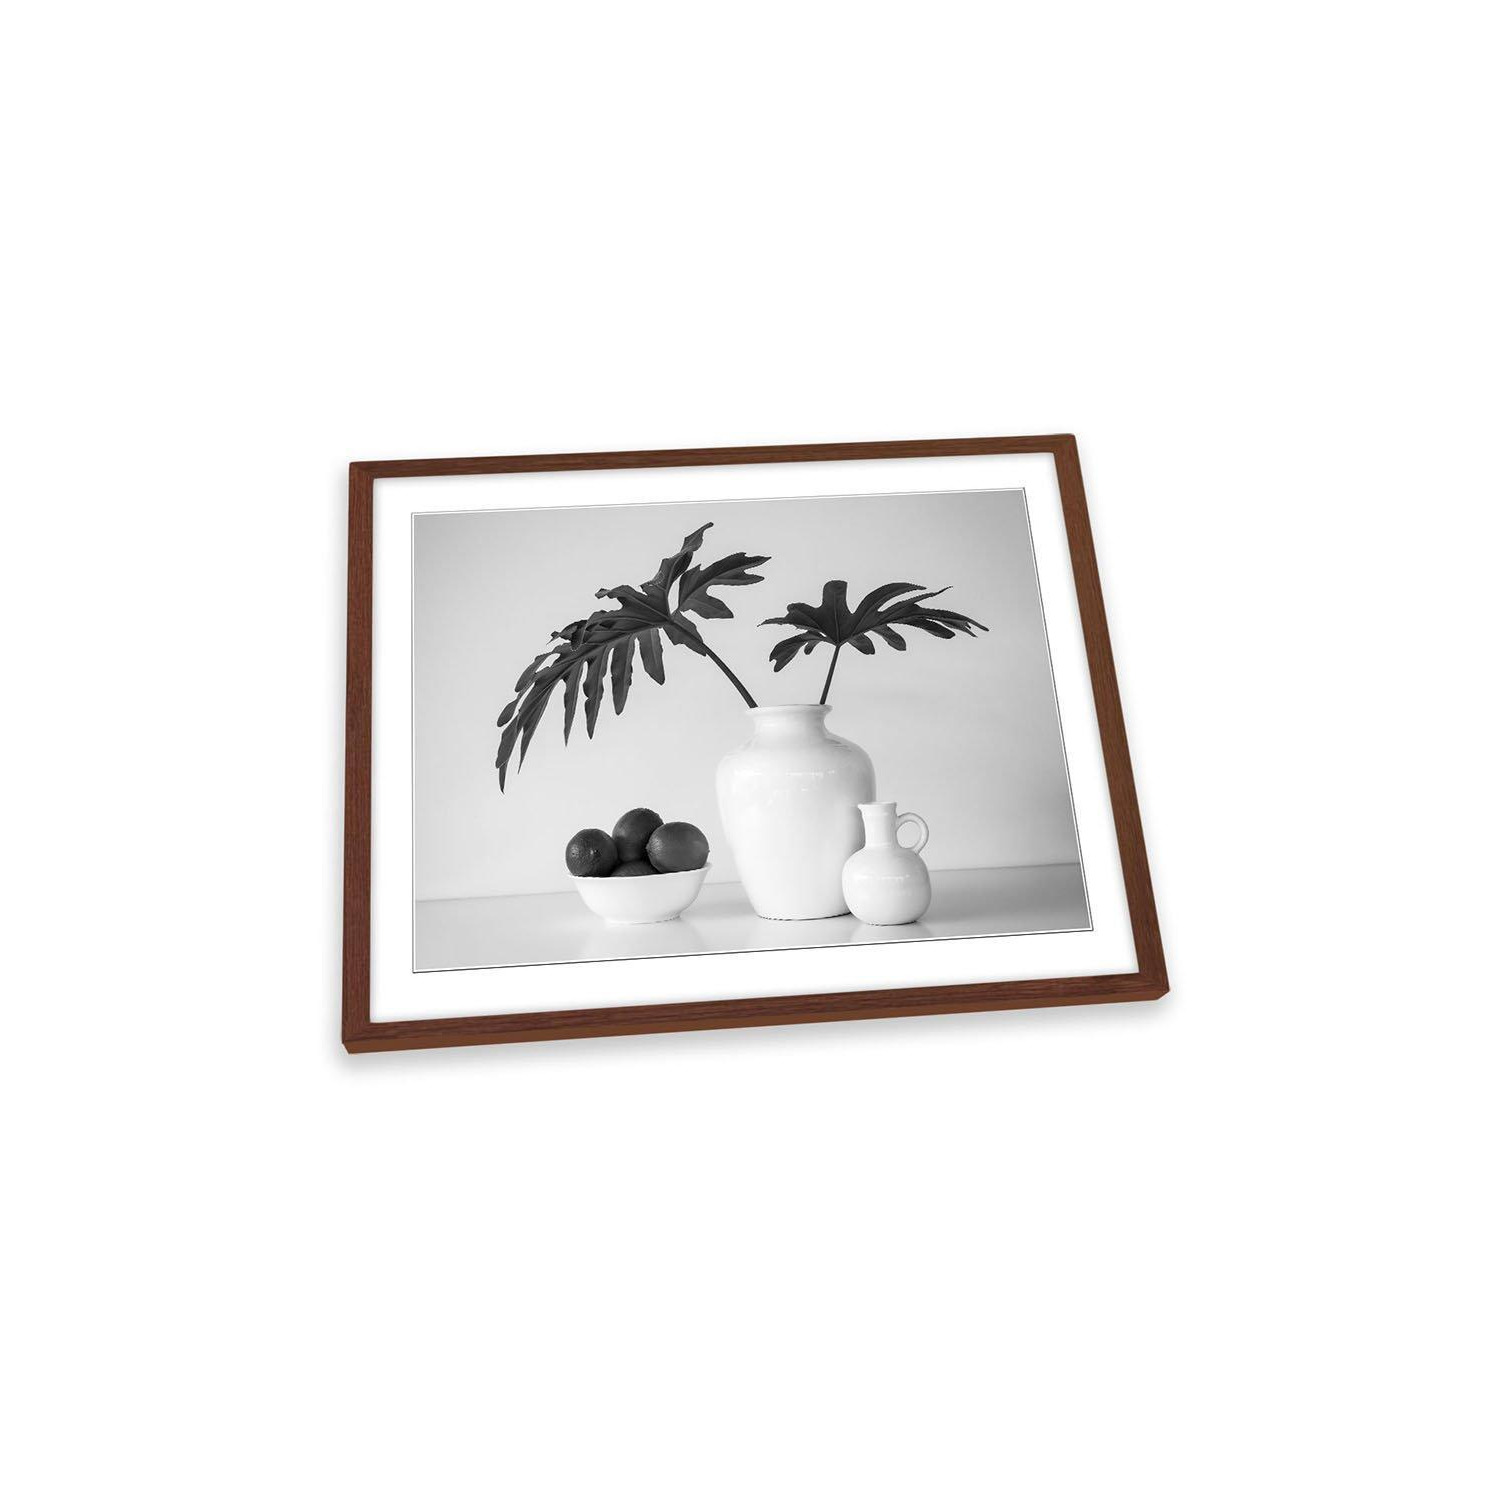 Tropical Leaves Still Life Vase Grey Framed Art Print Picture Wall Artwork - (W)64cm x (H)47cm - image 1